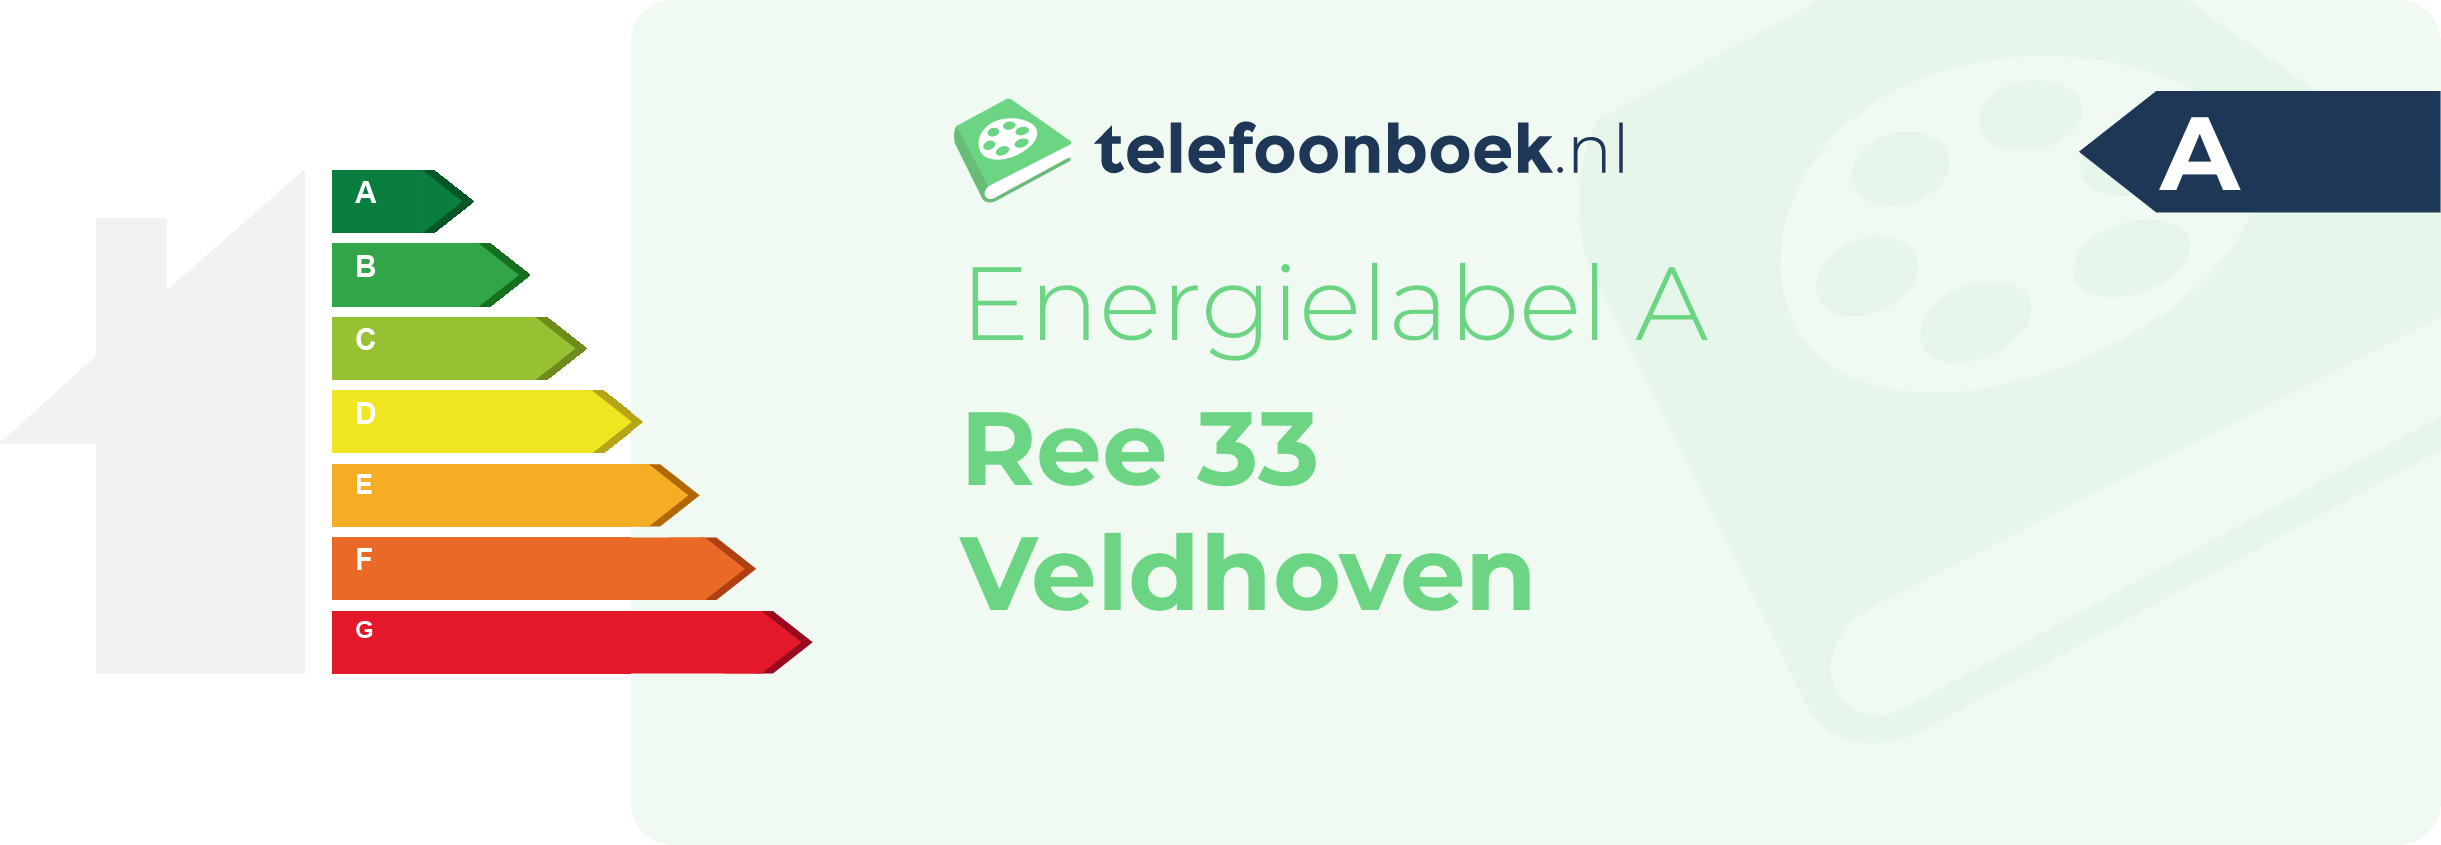 Energielabel Ree 33 Veldhoven